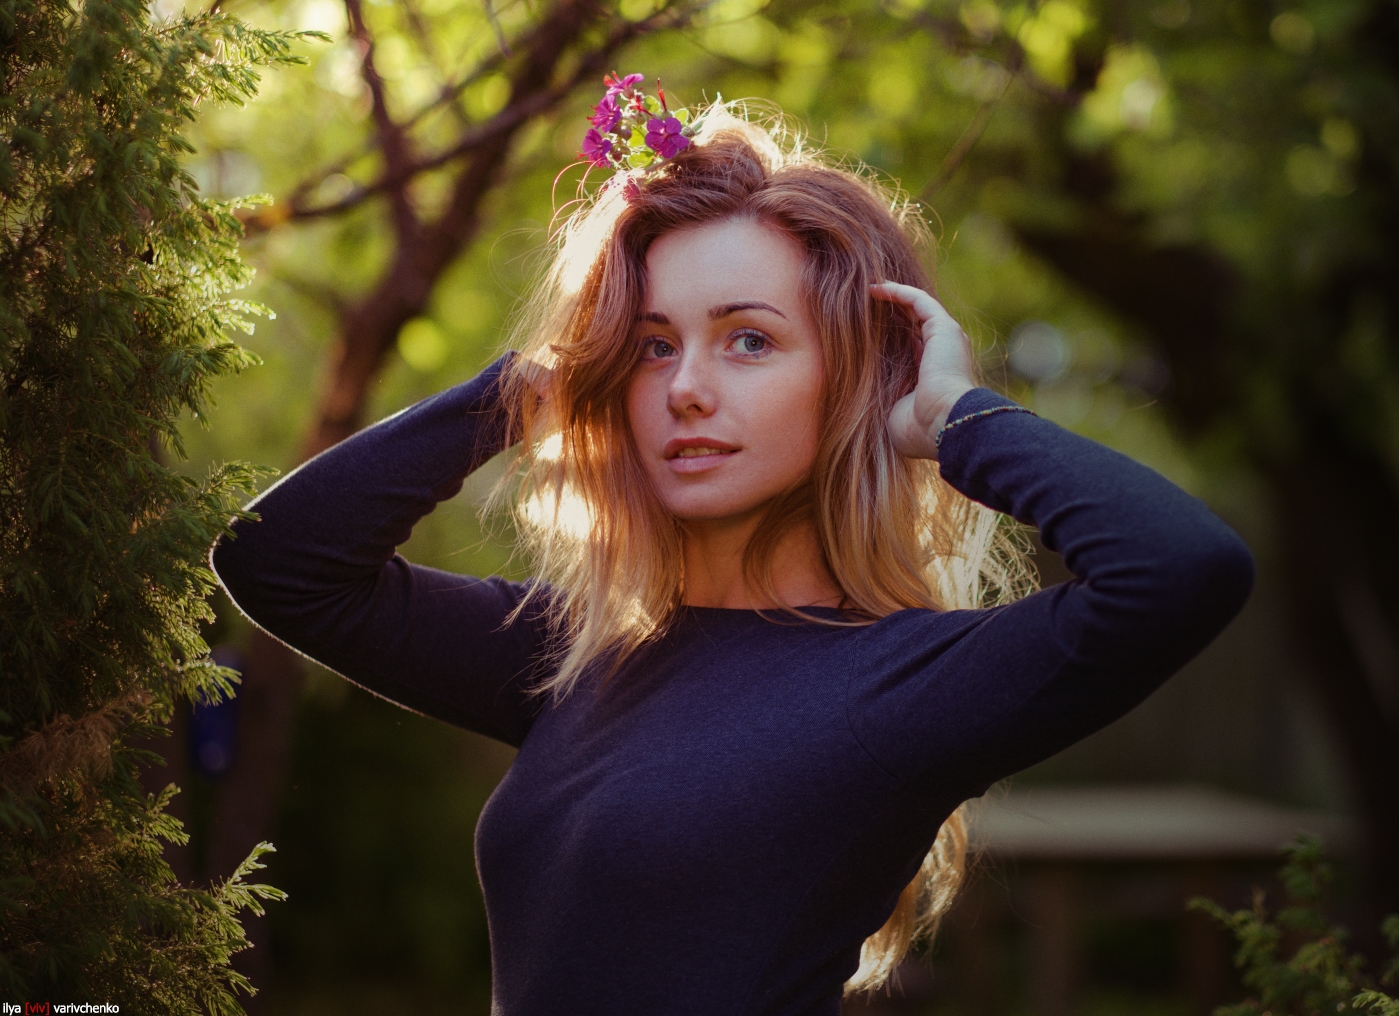 Ilya Varivchenko Women Model Blonde Women Outdoors Depth Of Field Looking Away Hands On Head 1399x1016